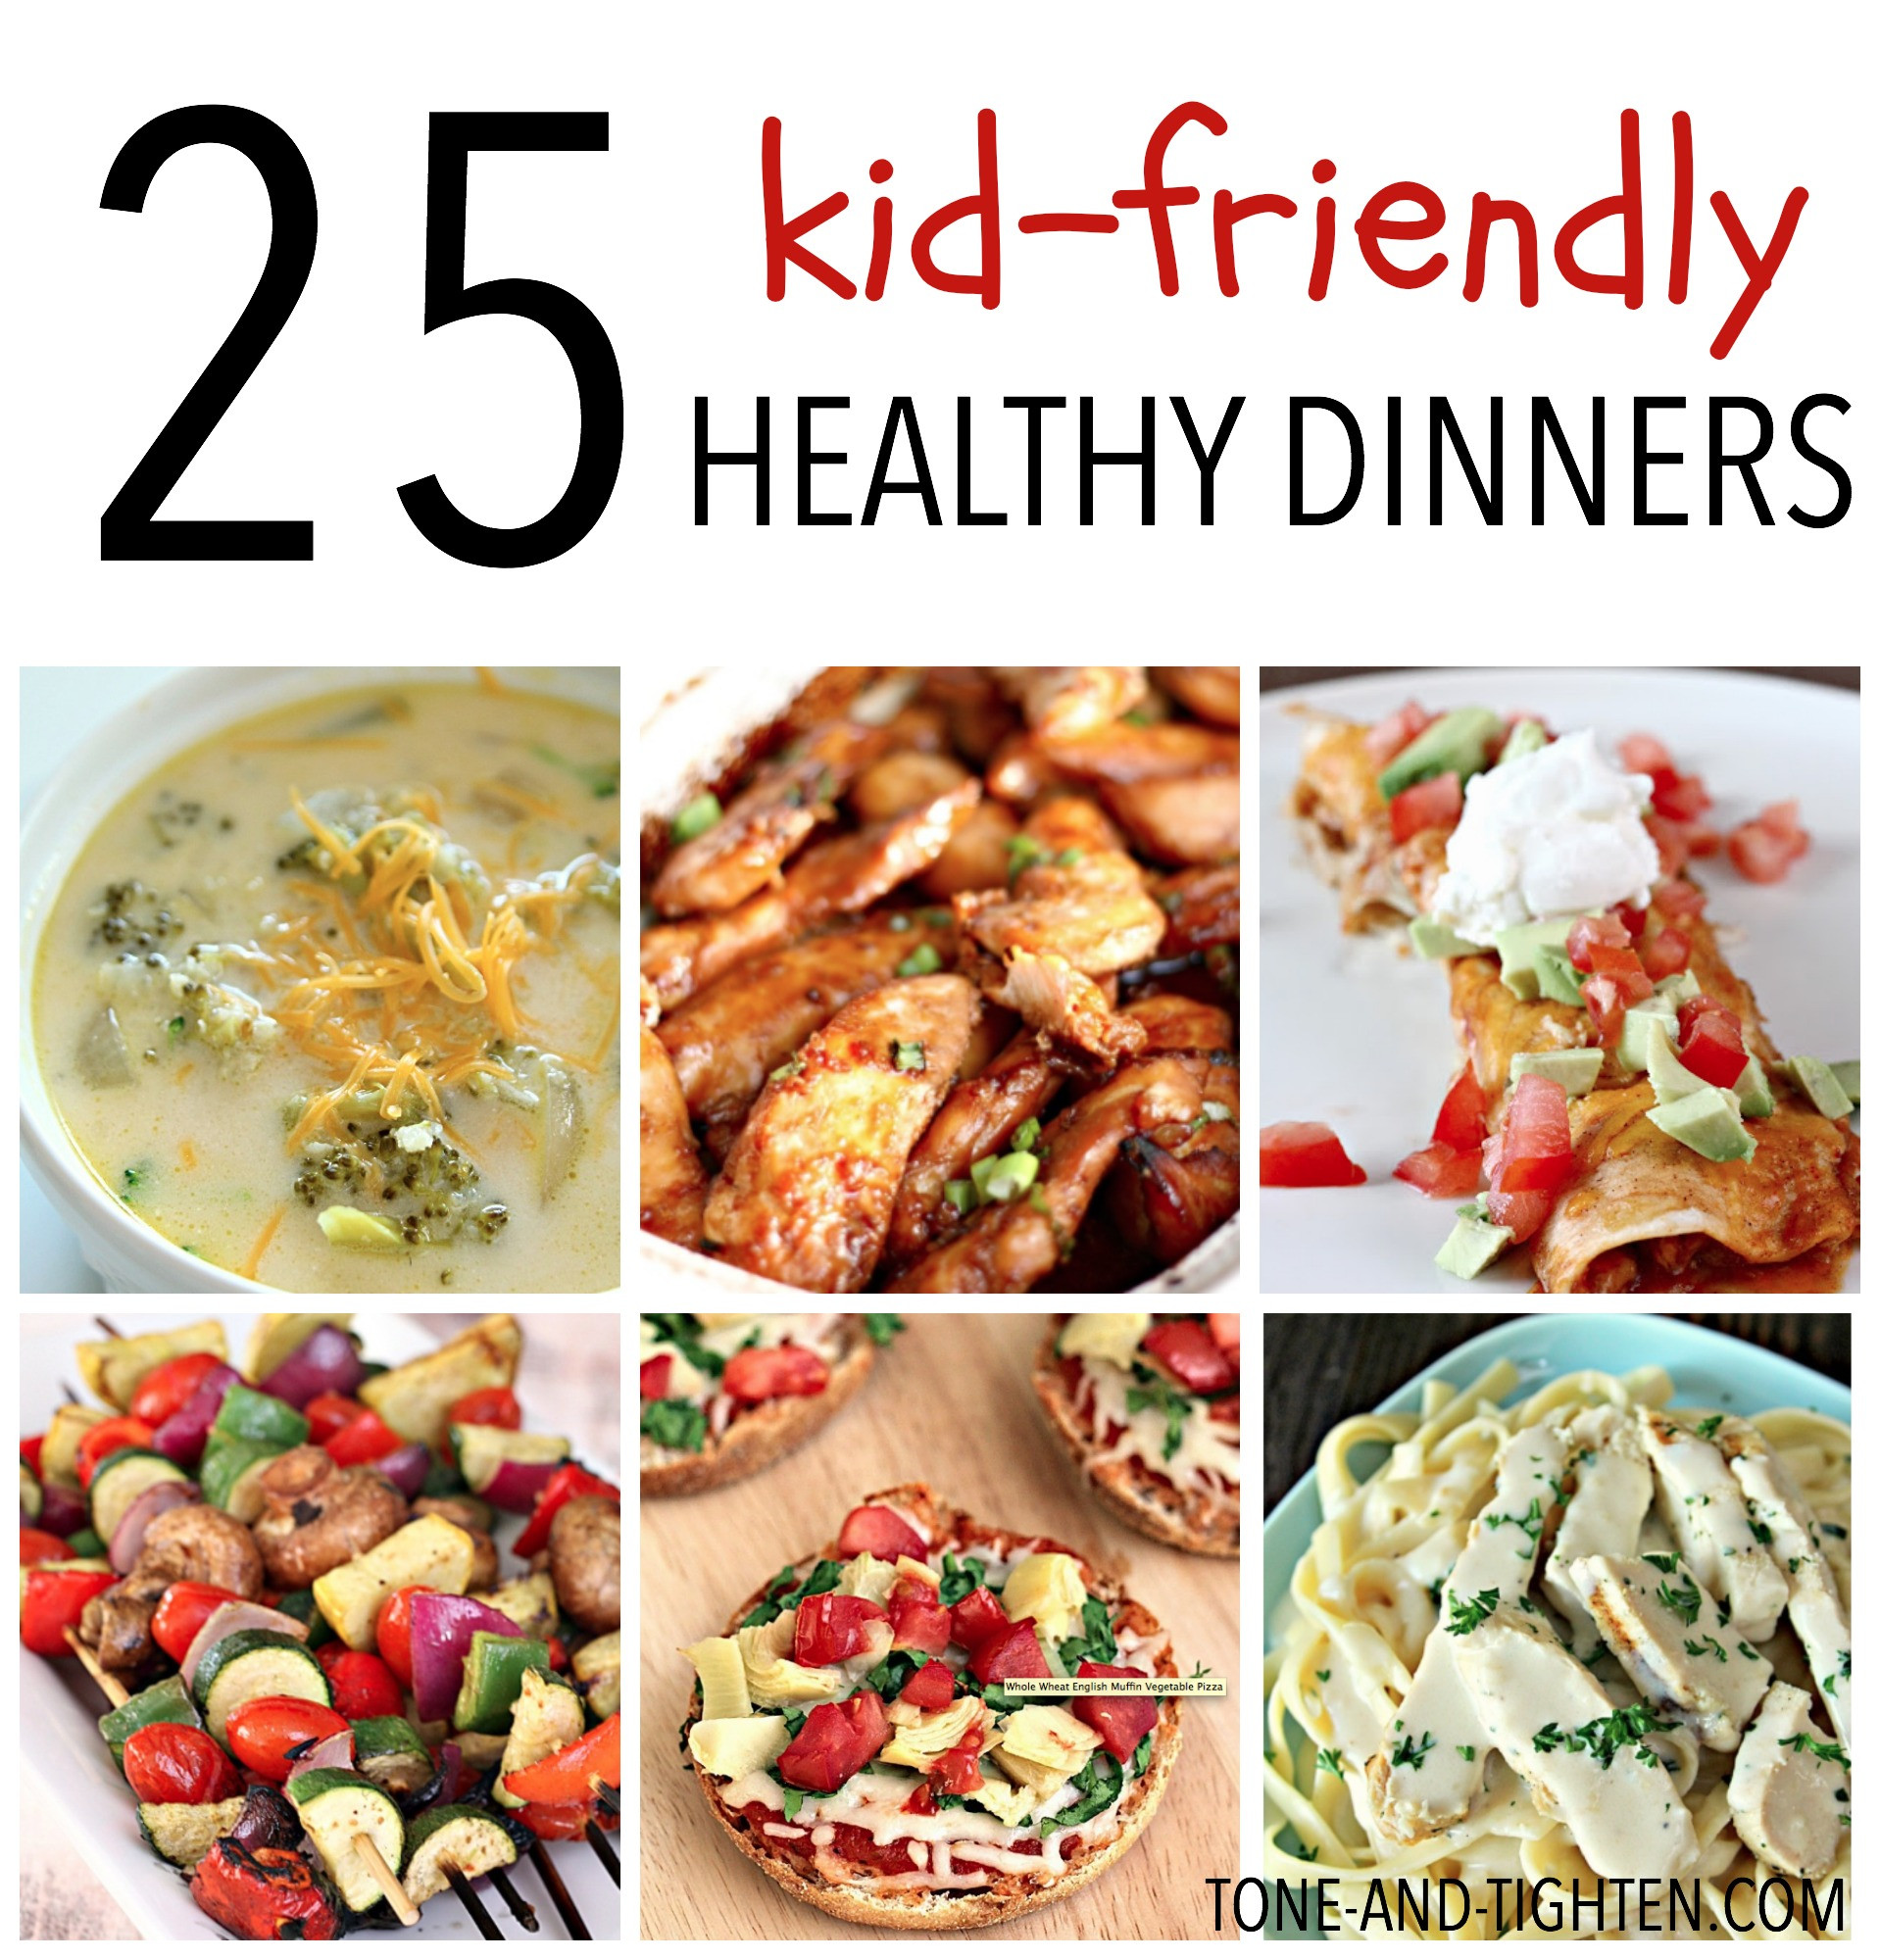 Easy Healthy Kid Friendly Dinners
 25 Kid Friendly Healthy Dinners